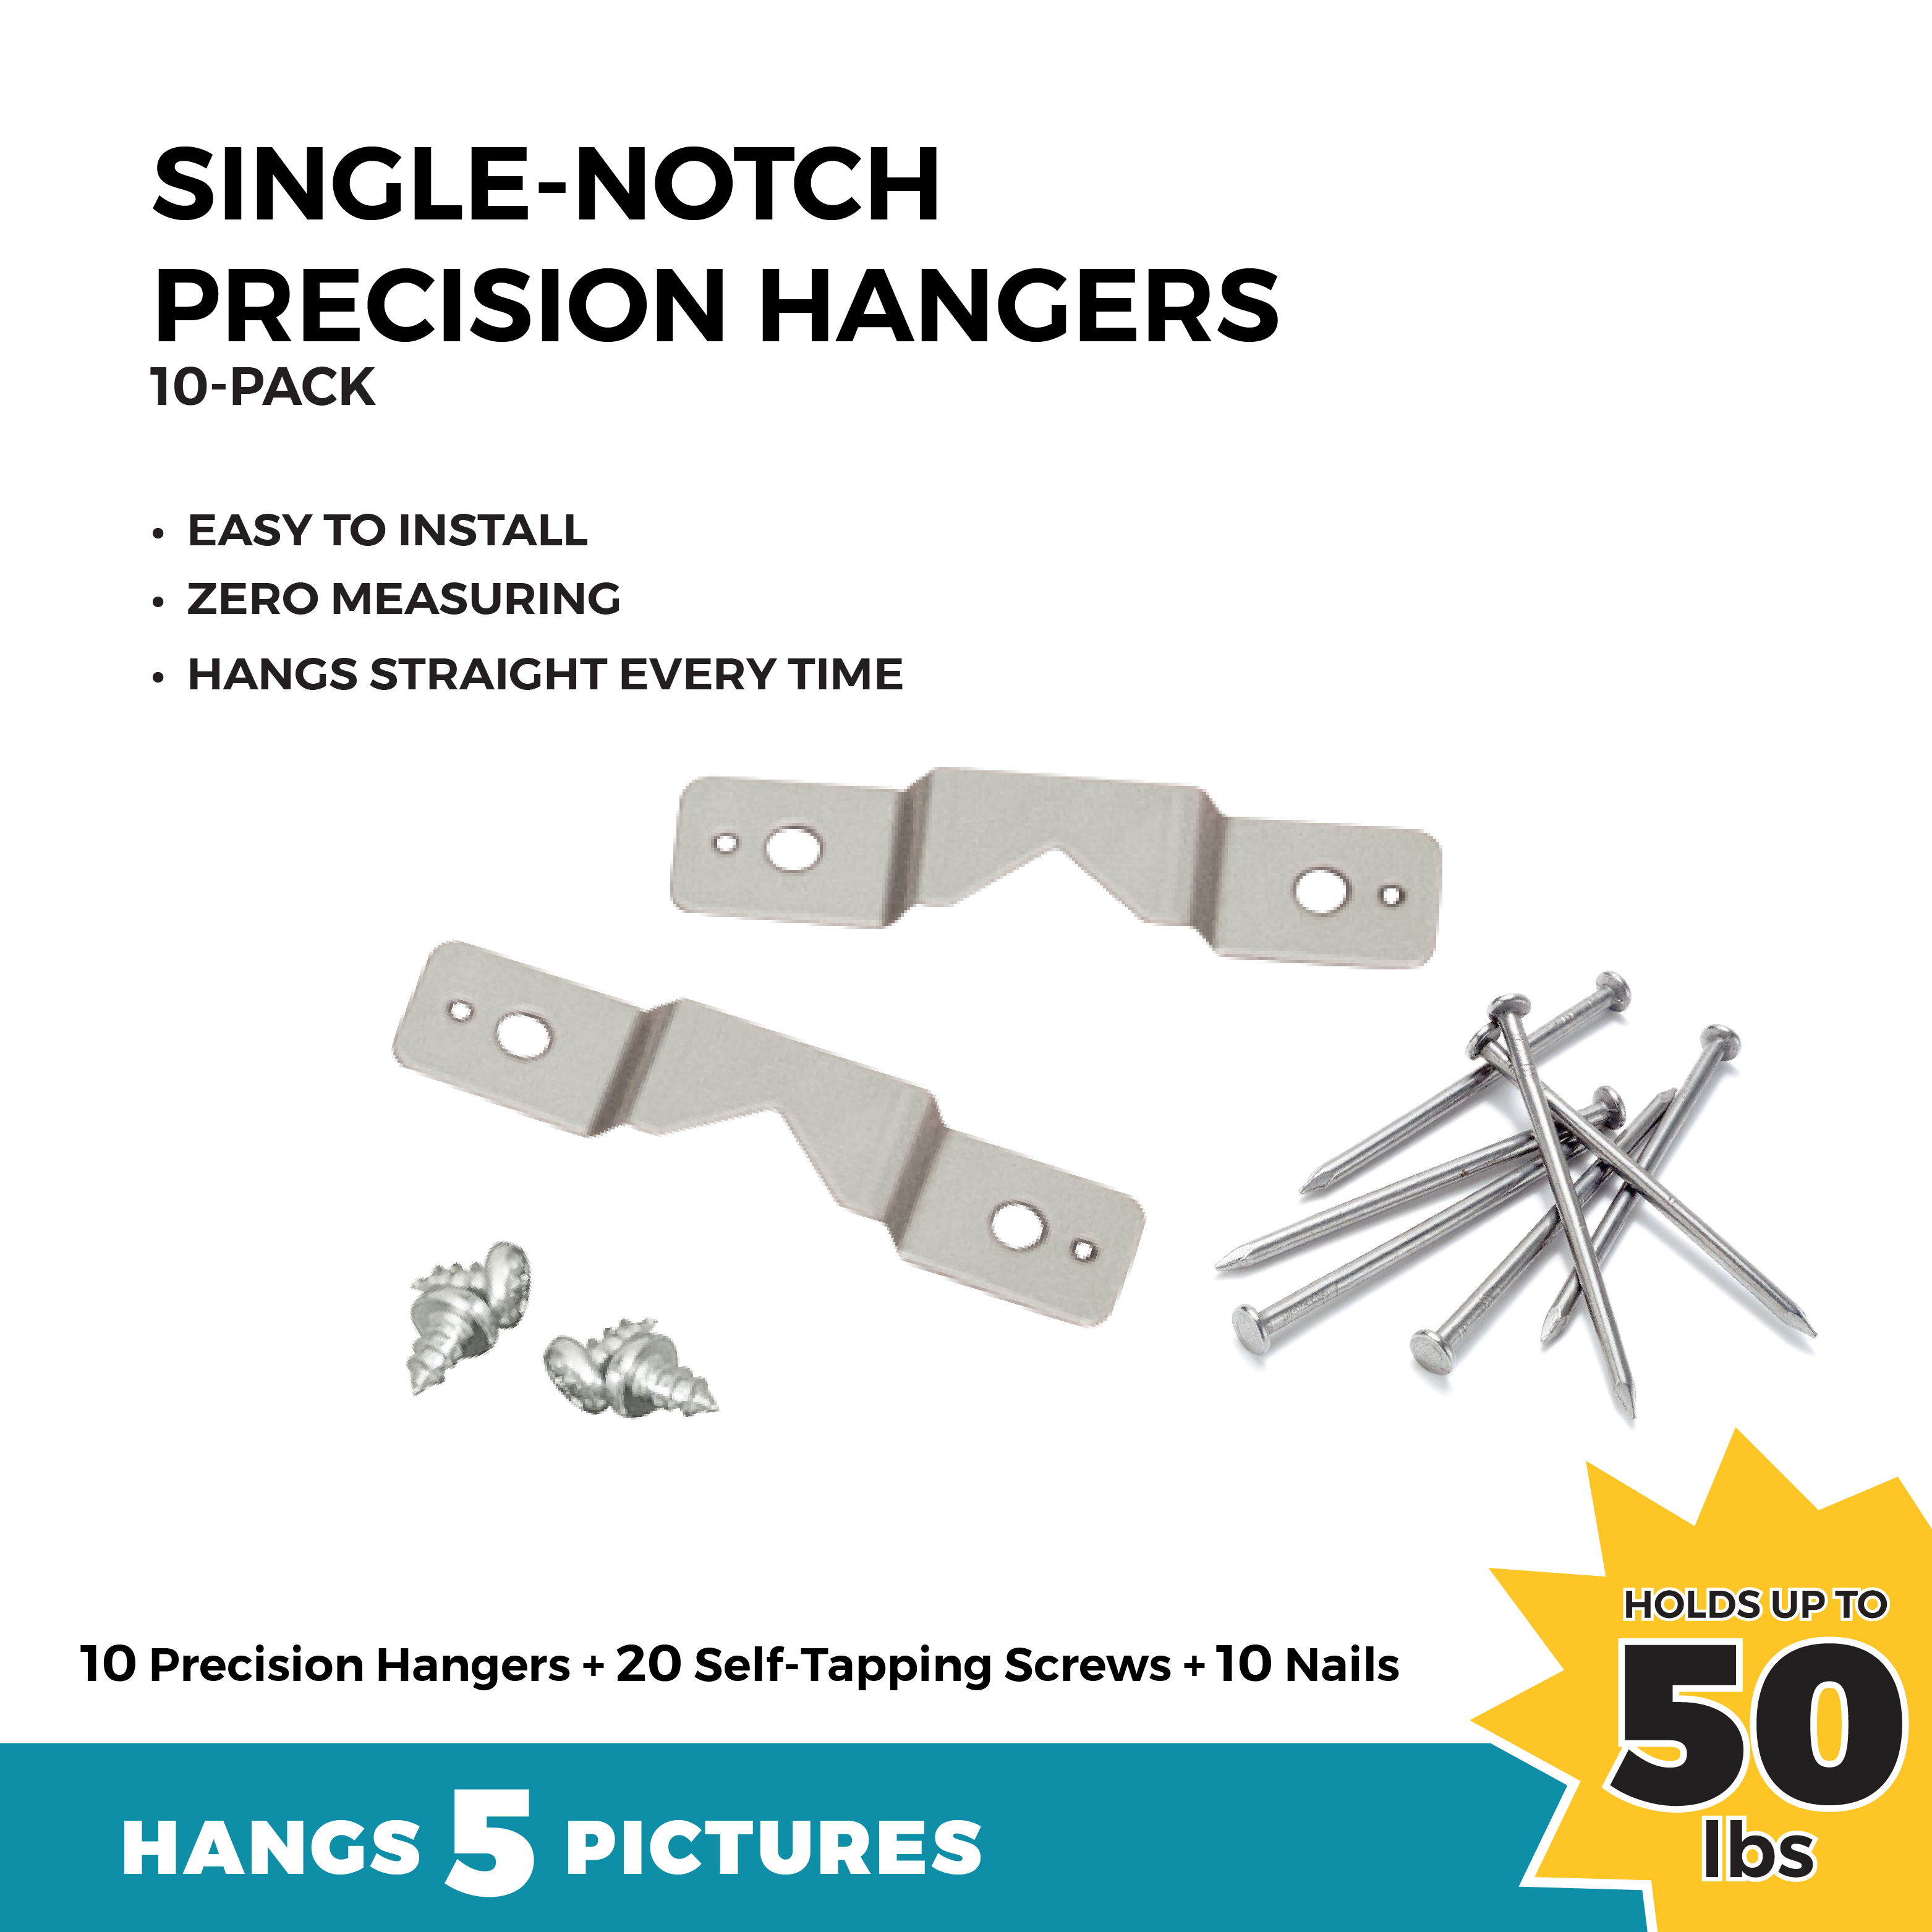 Single-Notch Precision Hangers (10-Pack)